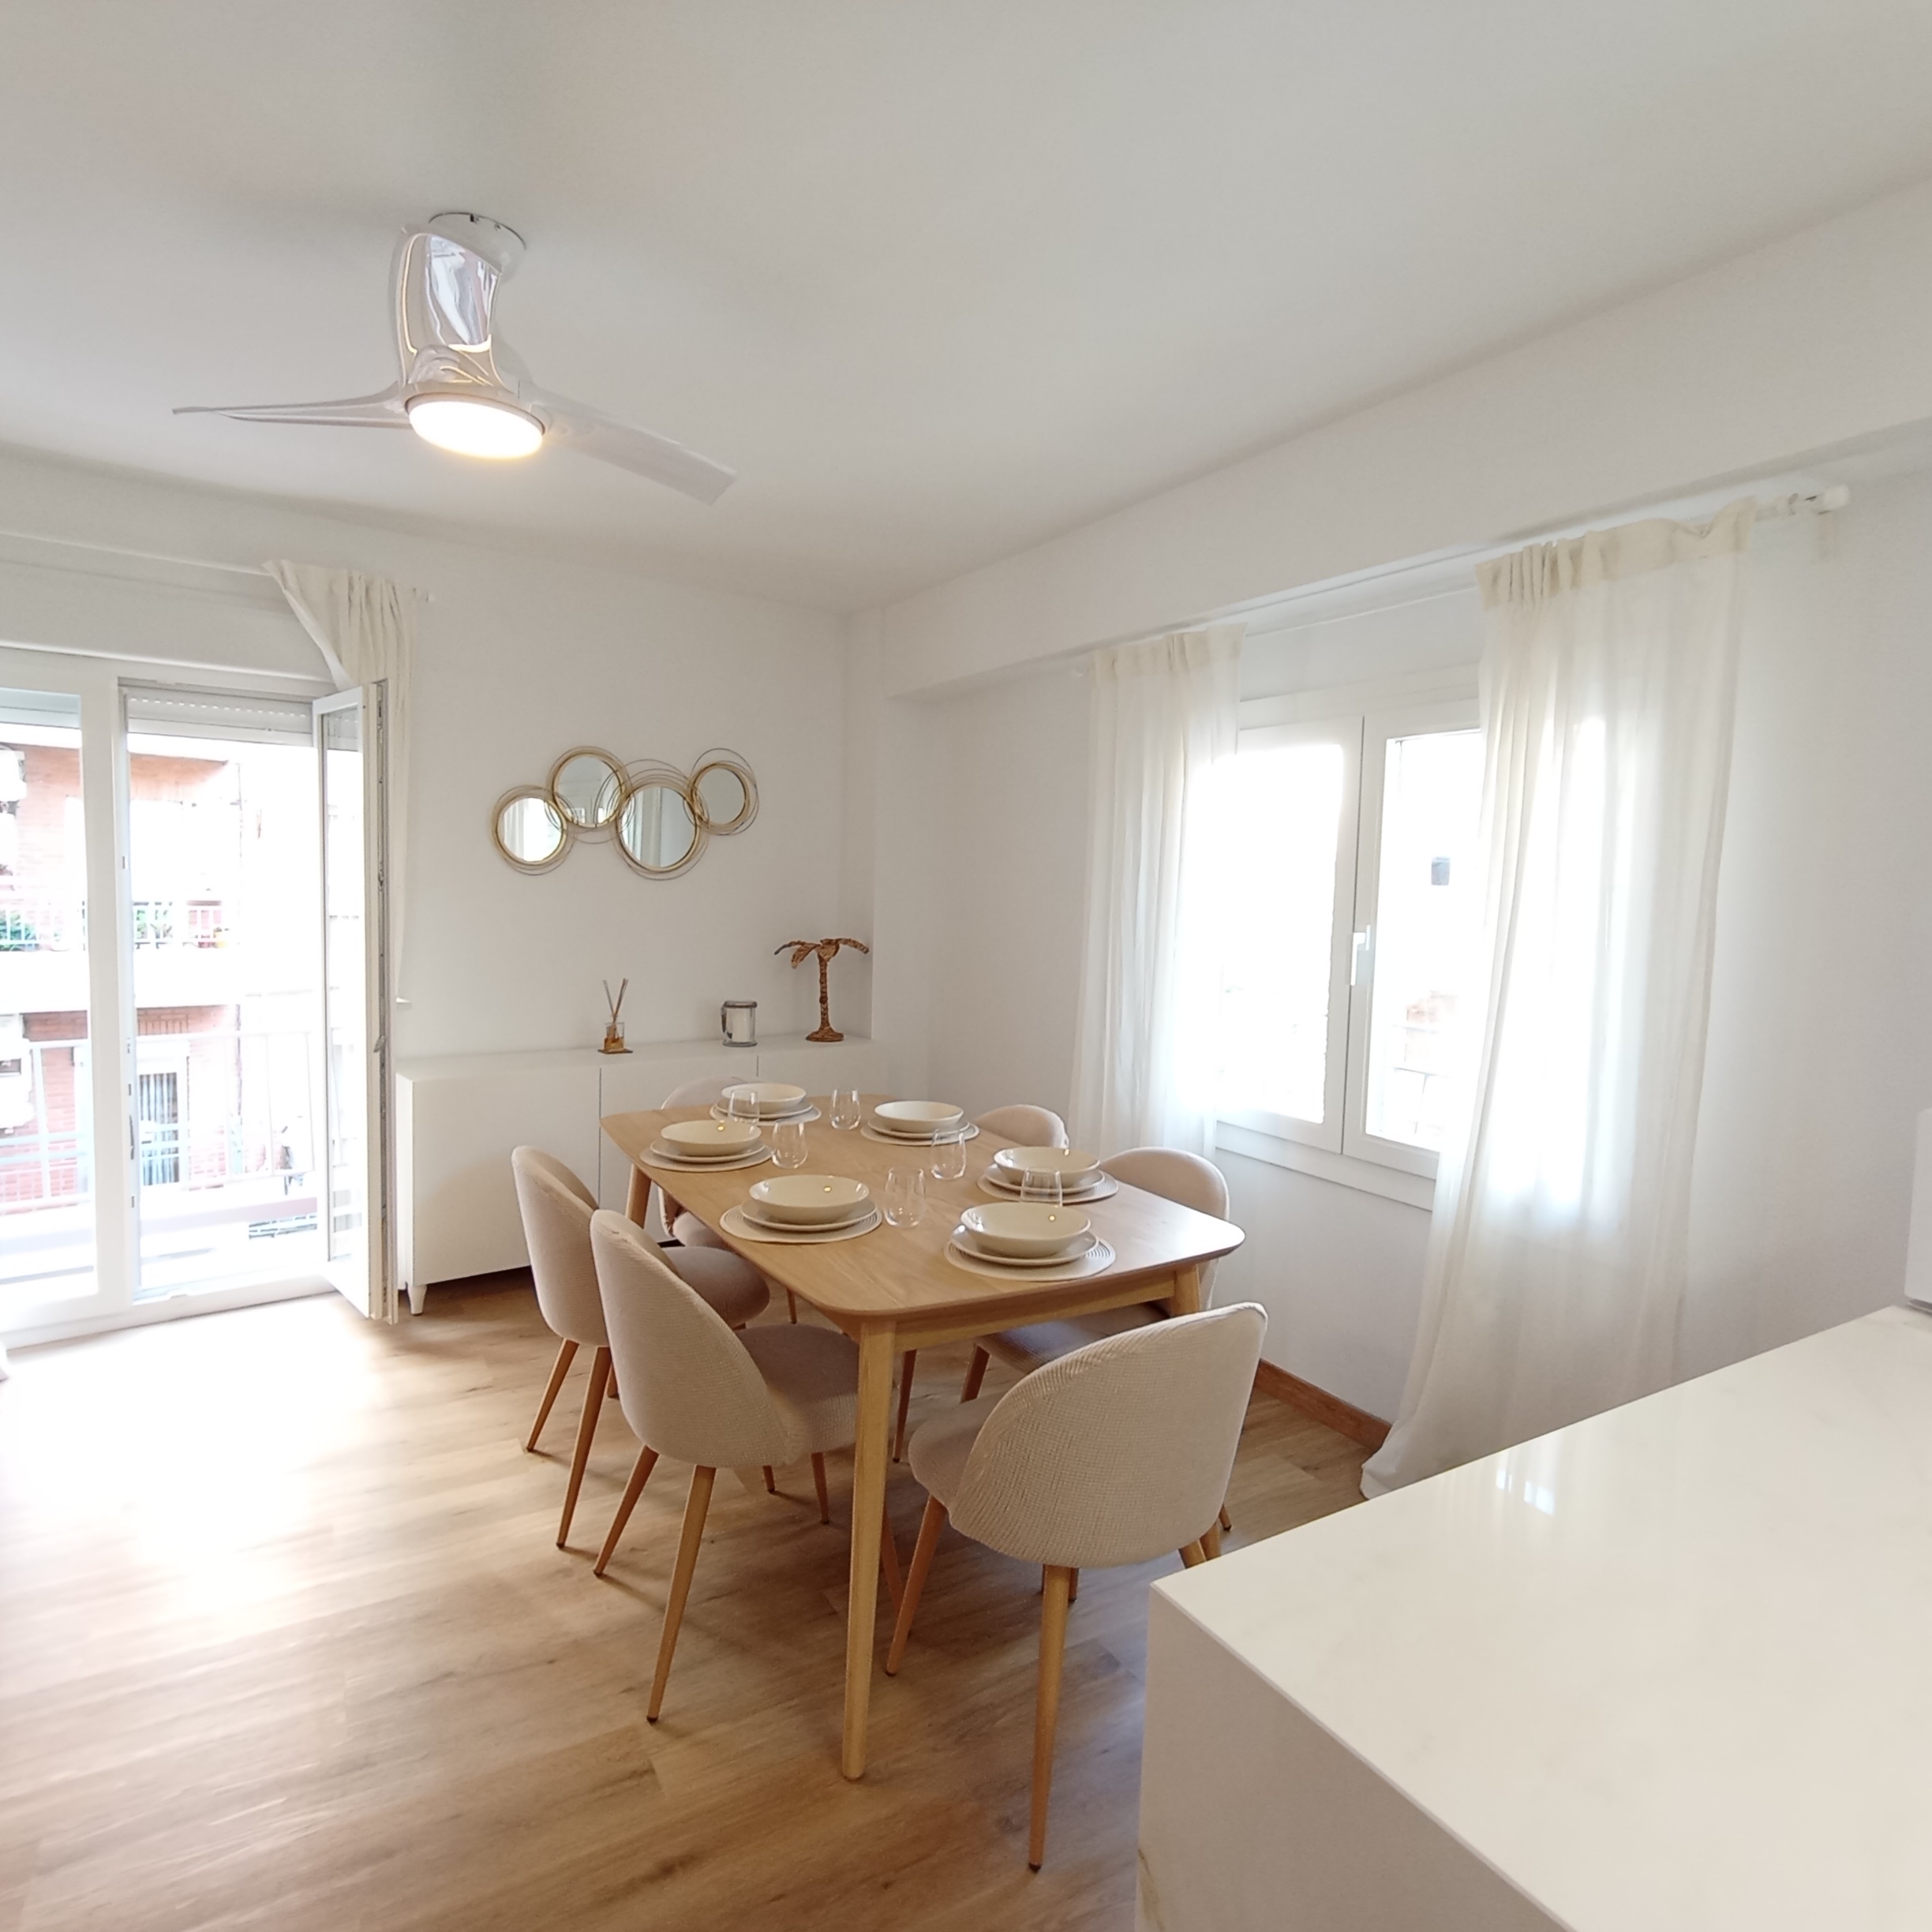 Trafalgar - 3 Bedroom apartment for rent in Valencia dining table